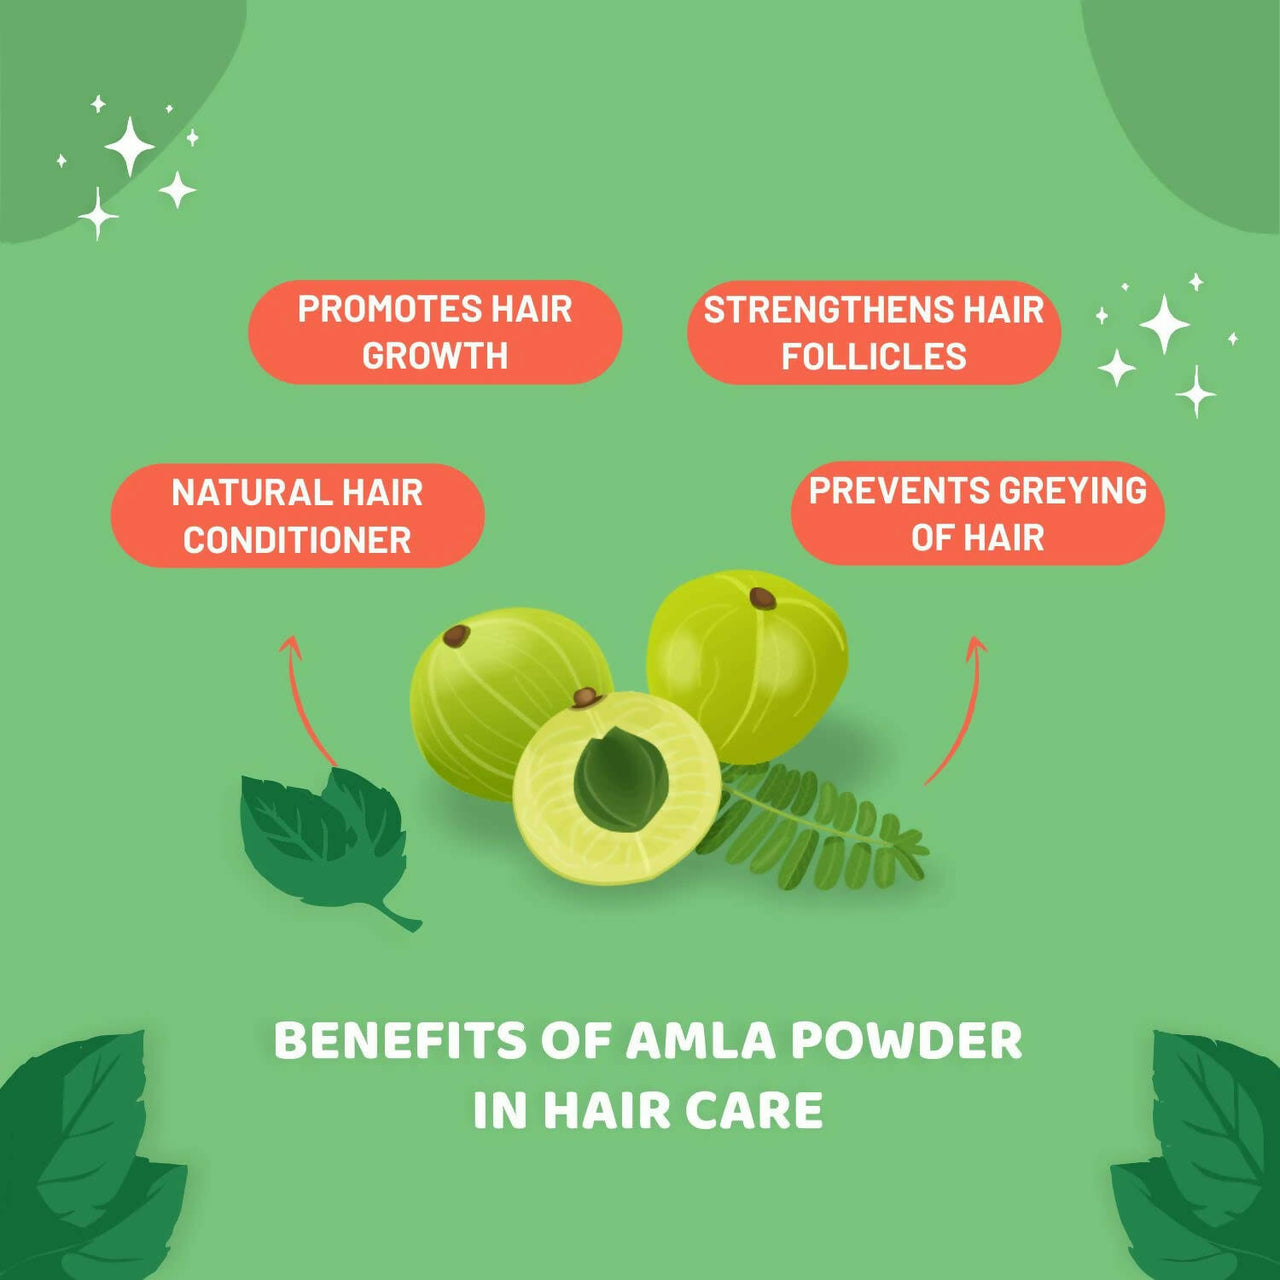 Carbamide Forte Amla Powder for Hair Growth & Skin - Distacart